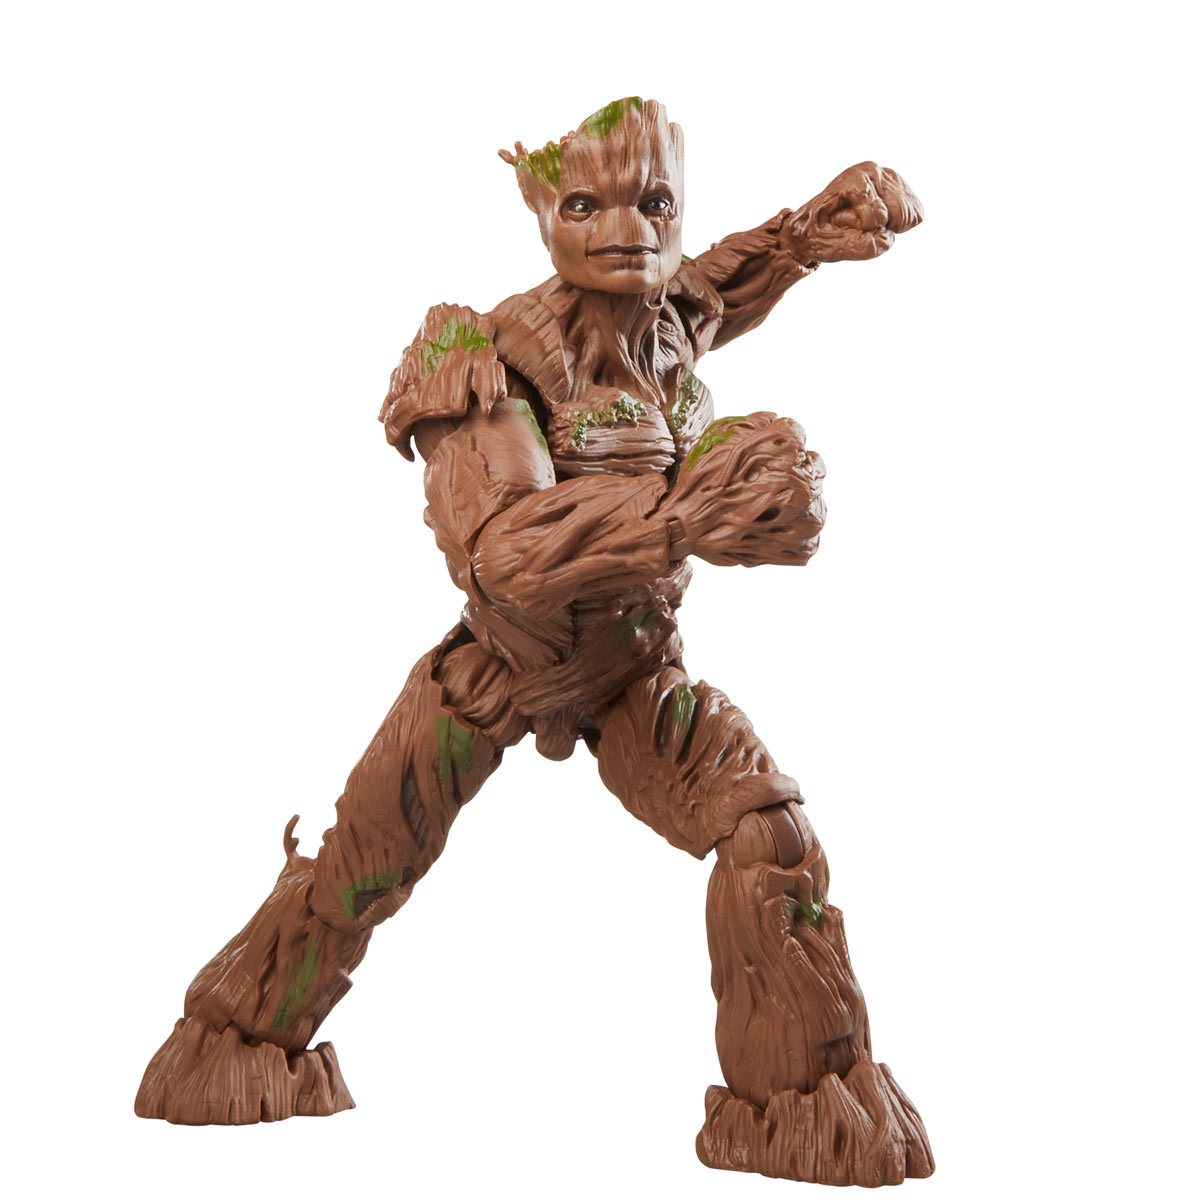 Guardians of the Galaxy Comics Marvel Legends Actionfigur Groot 15 cm F64825L00 5010994181673